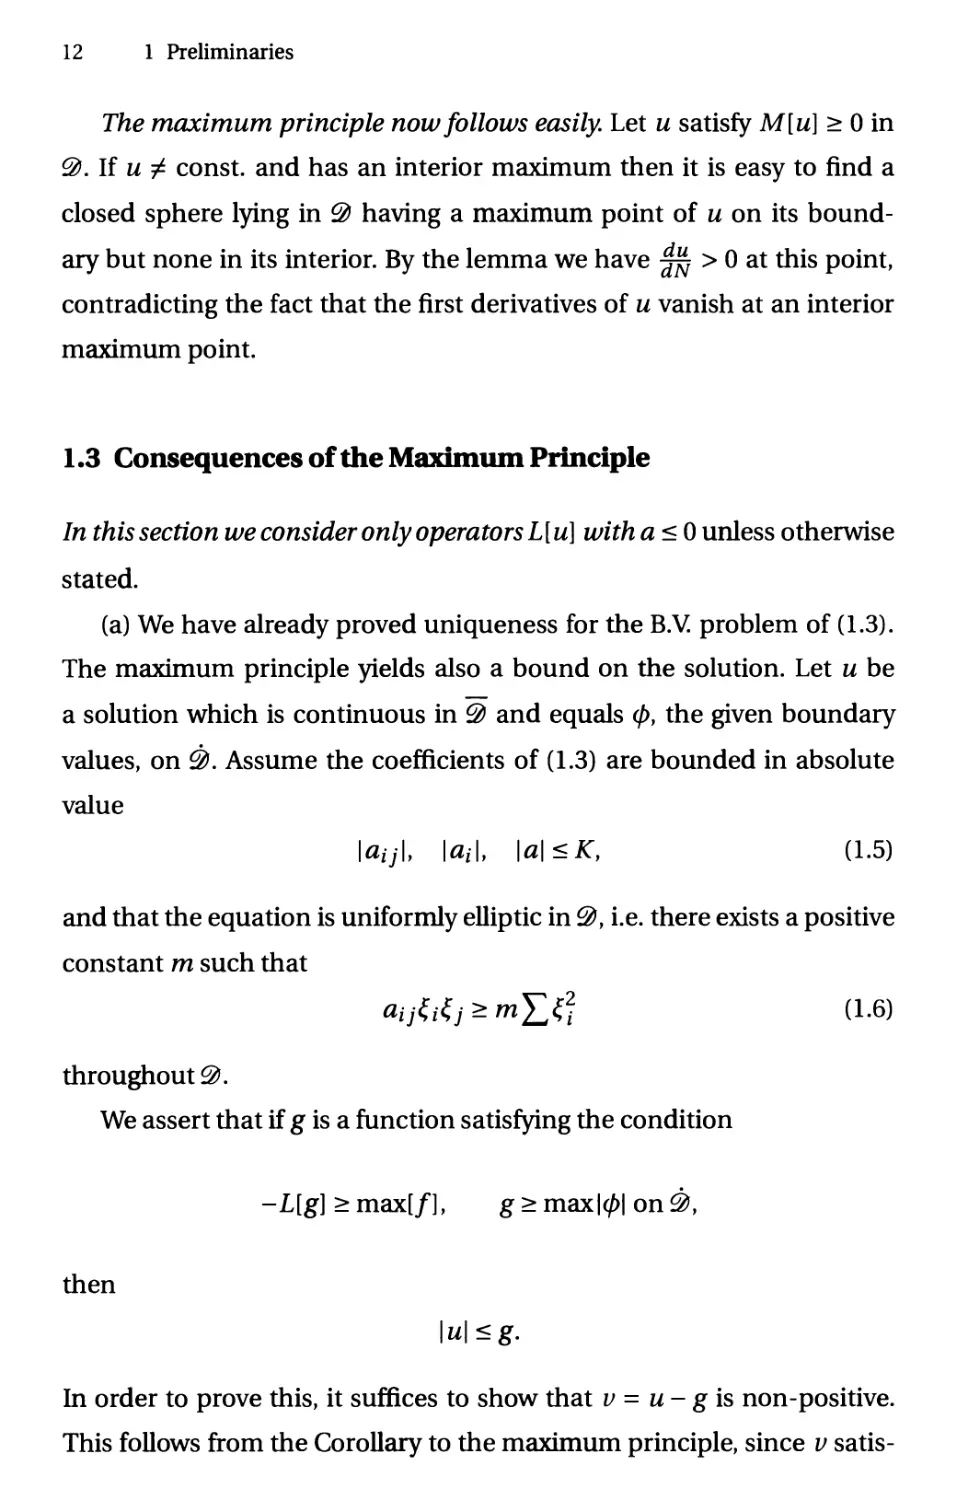 1.3 Consequences of the Maximum Principle